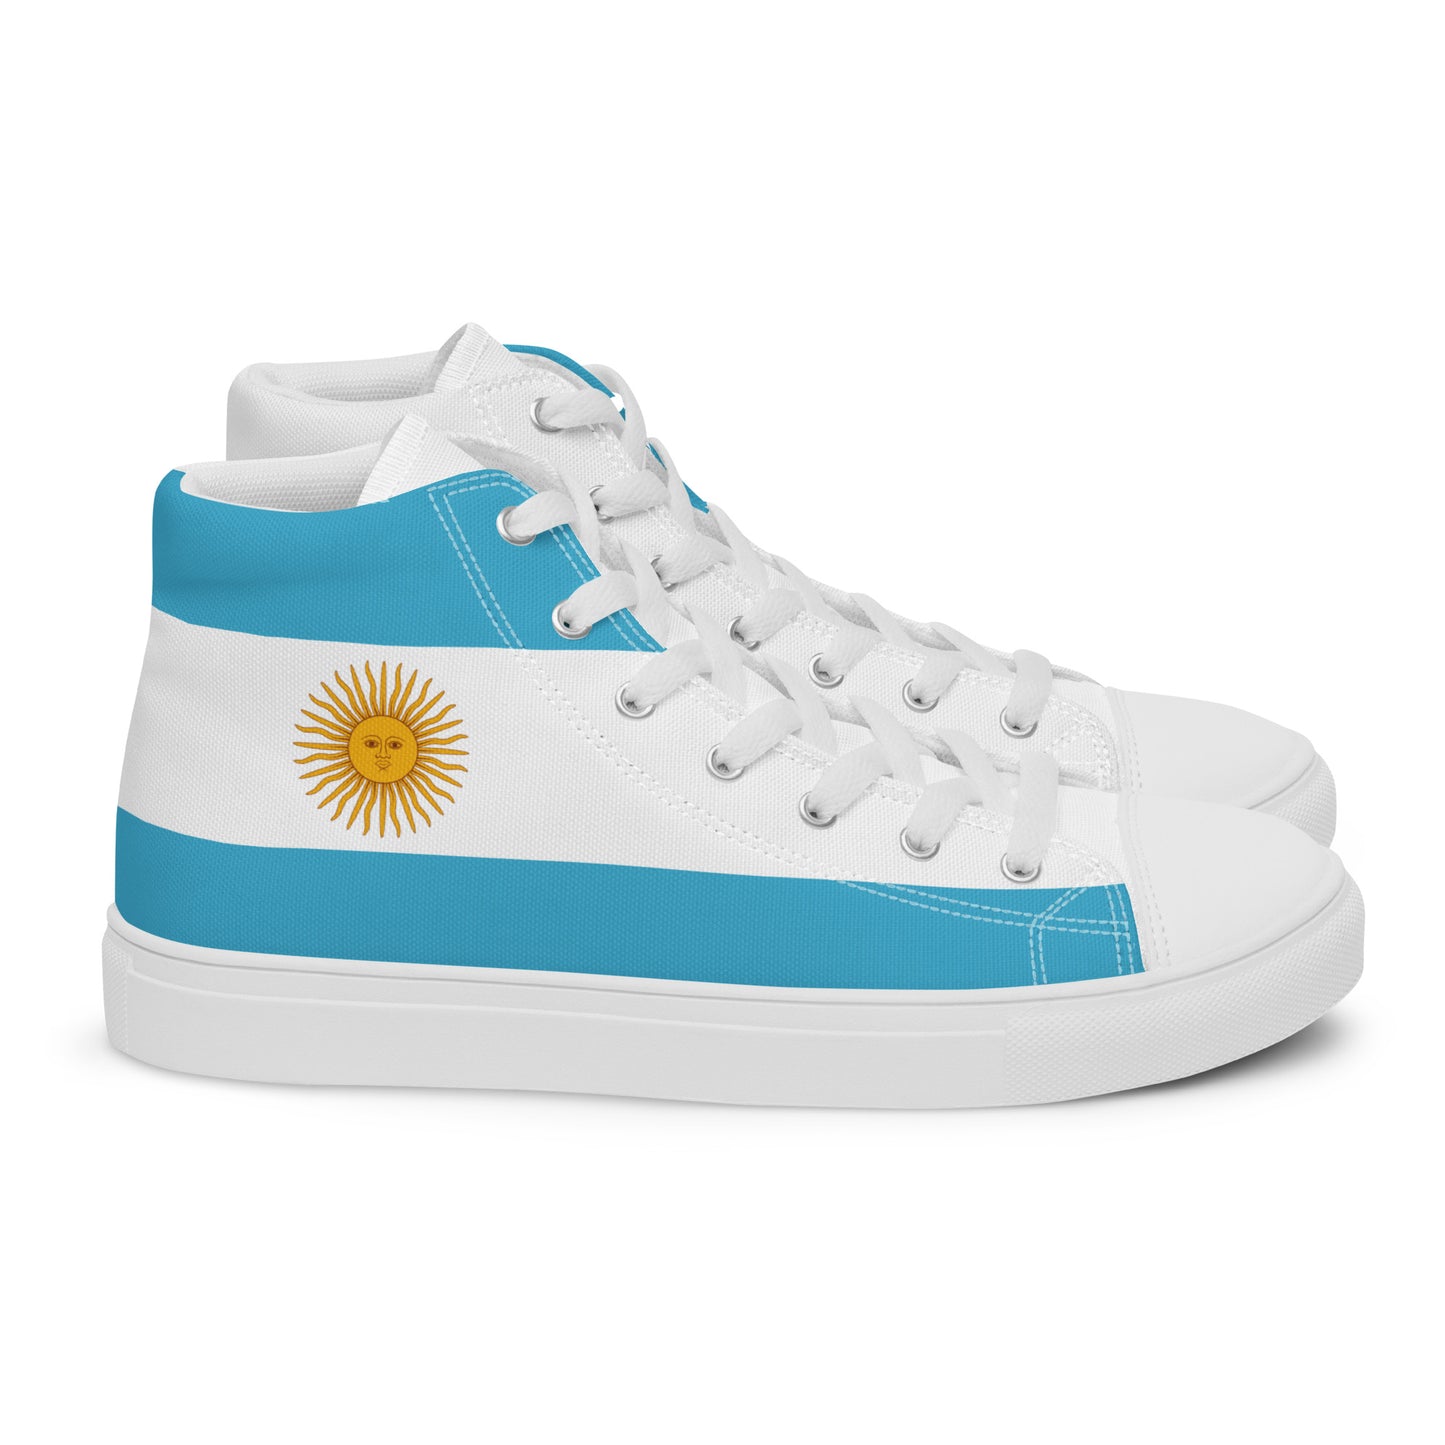 Argentina - Women - Bandera - High top shoes